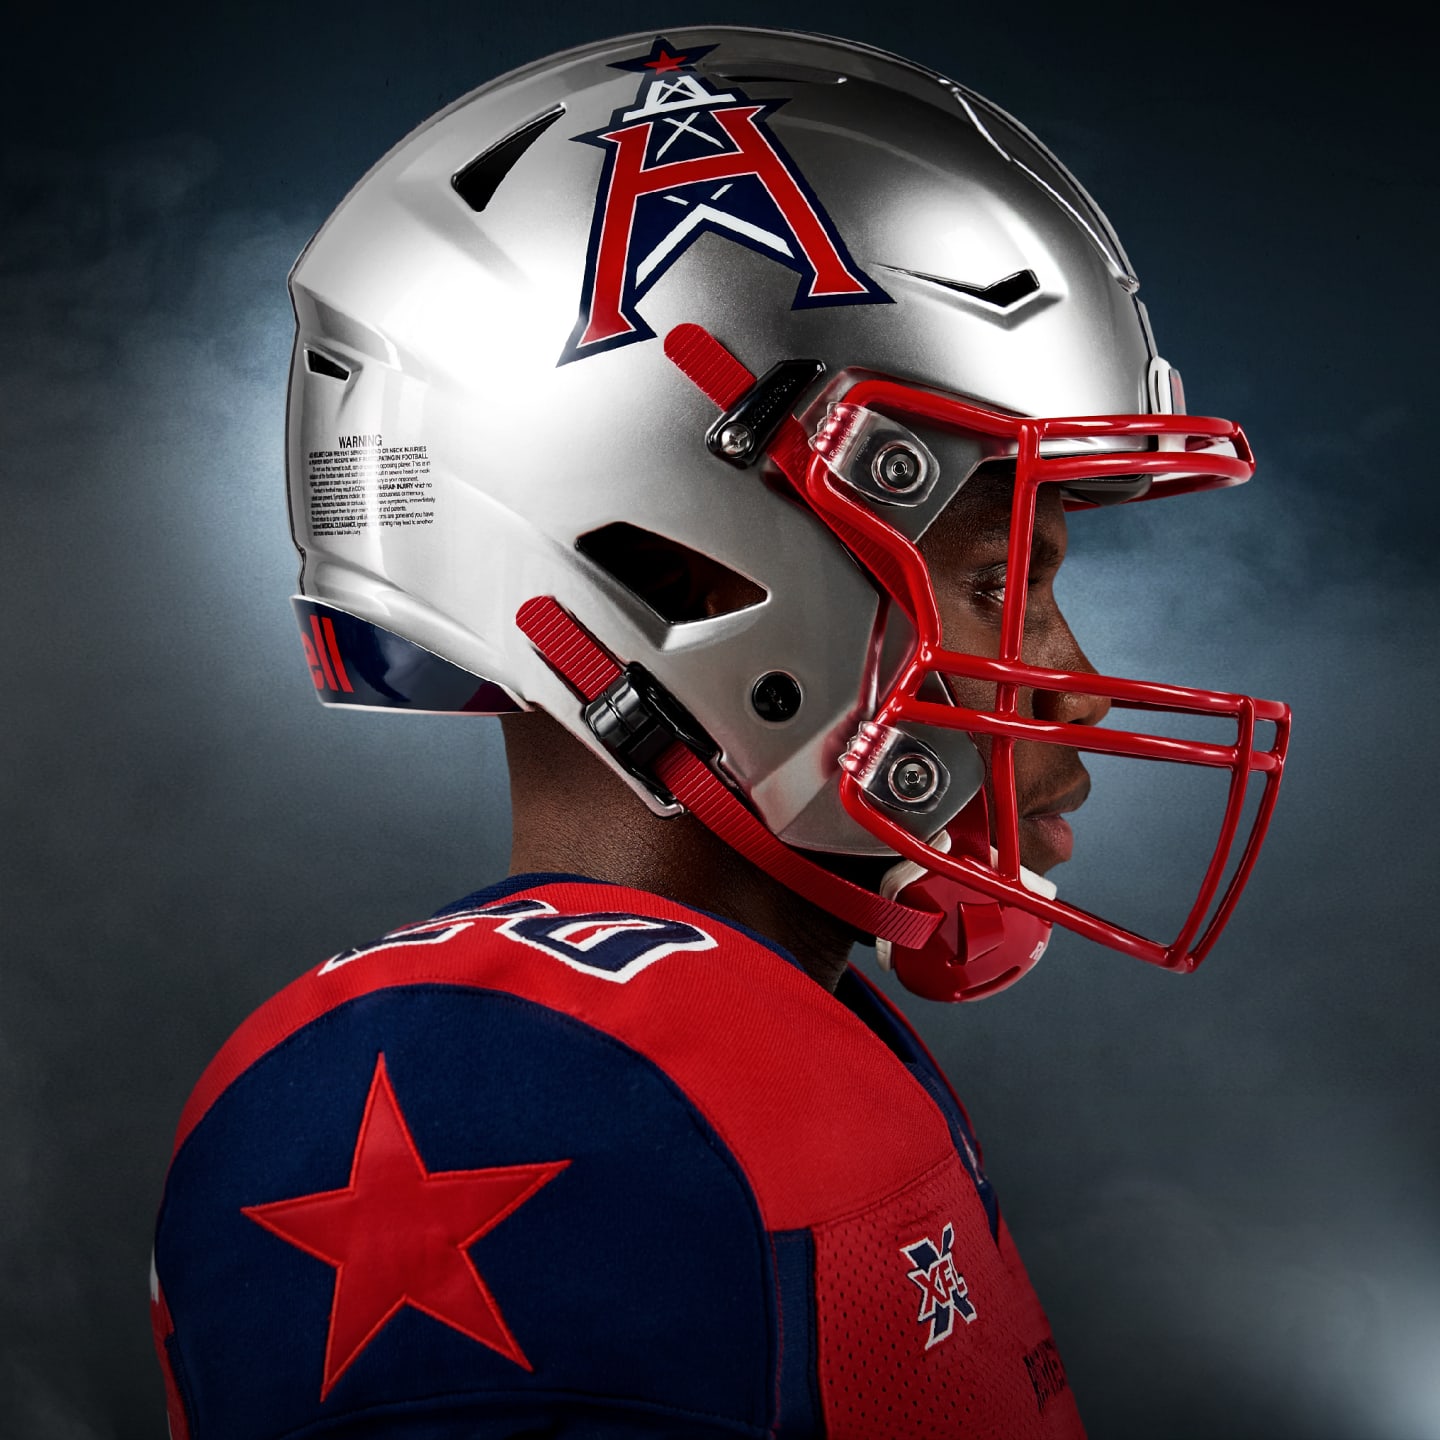 Houston XFL team unveils new helmet, team uniforms